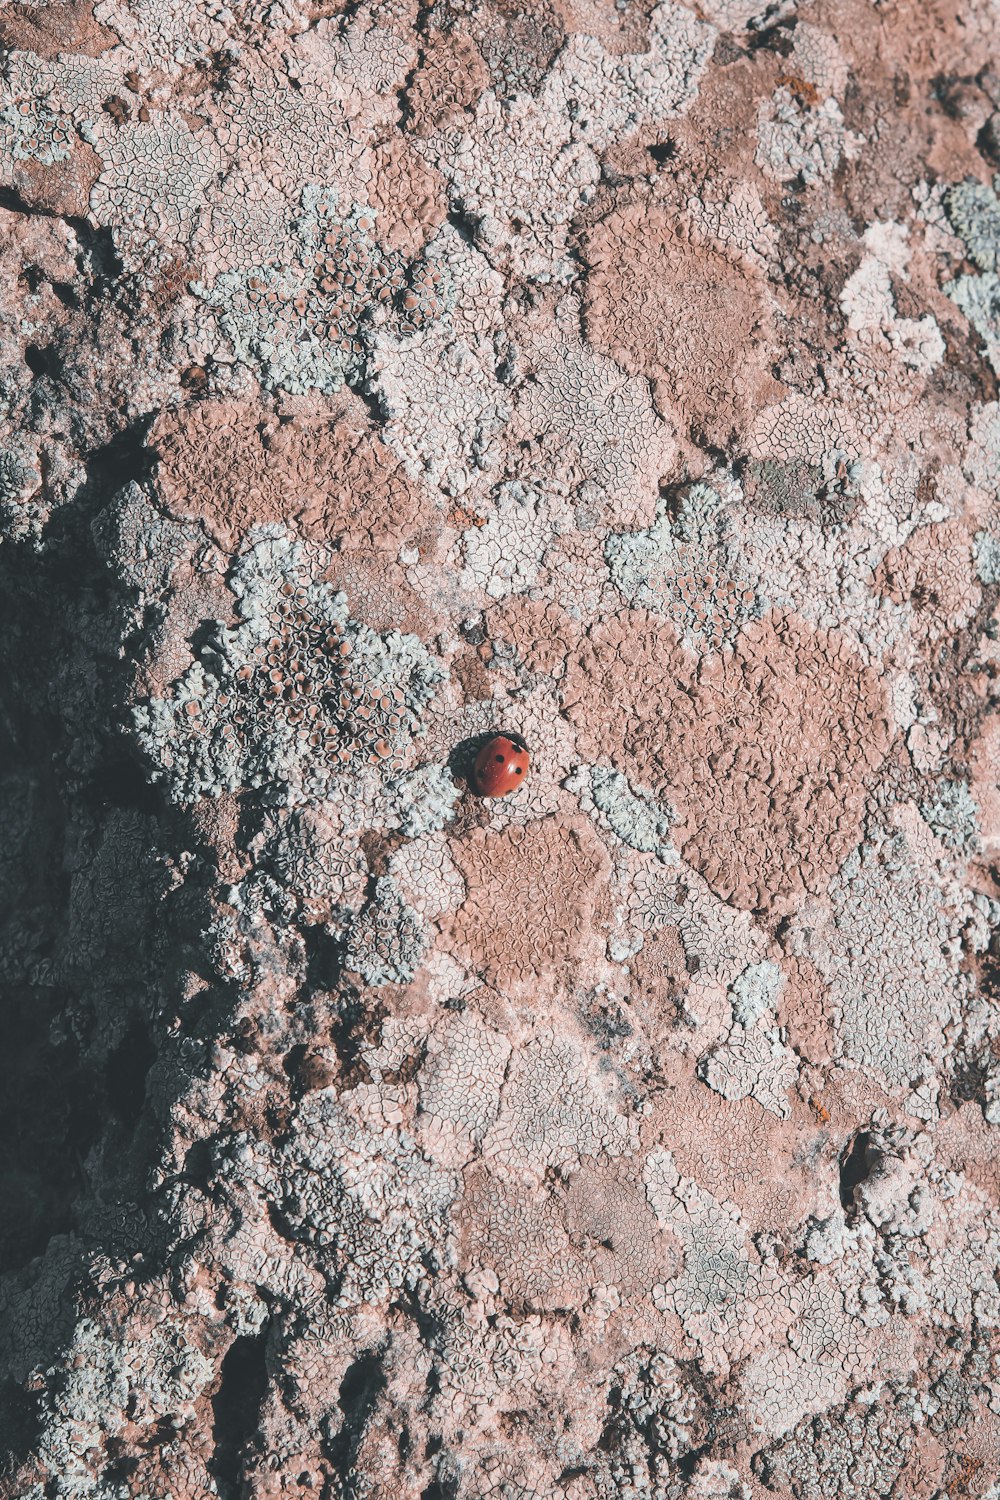 red and black ladybug on brown rock